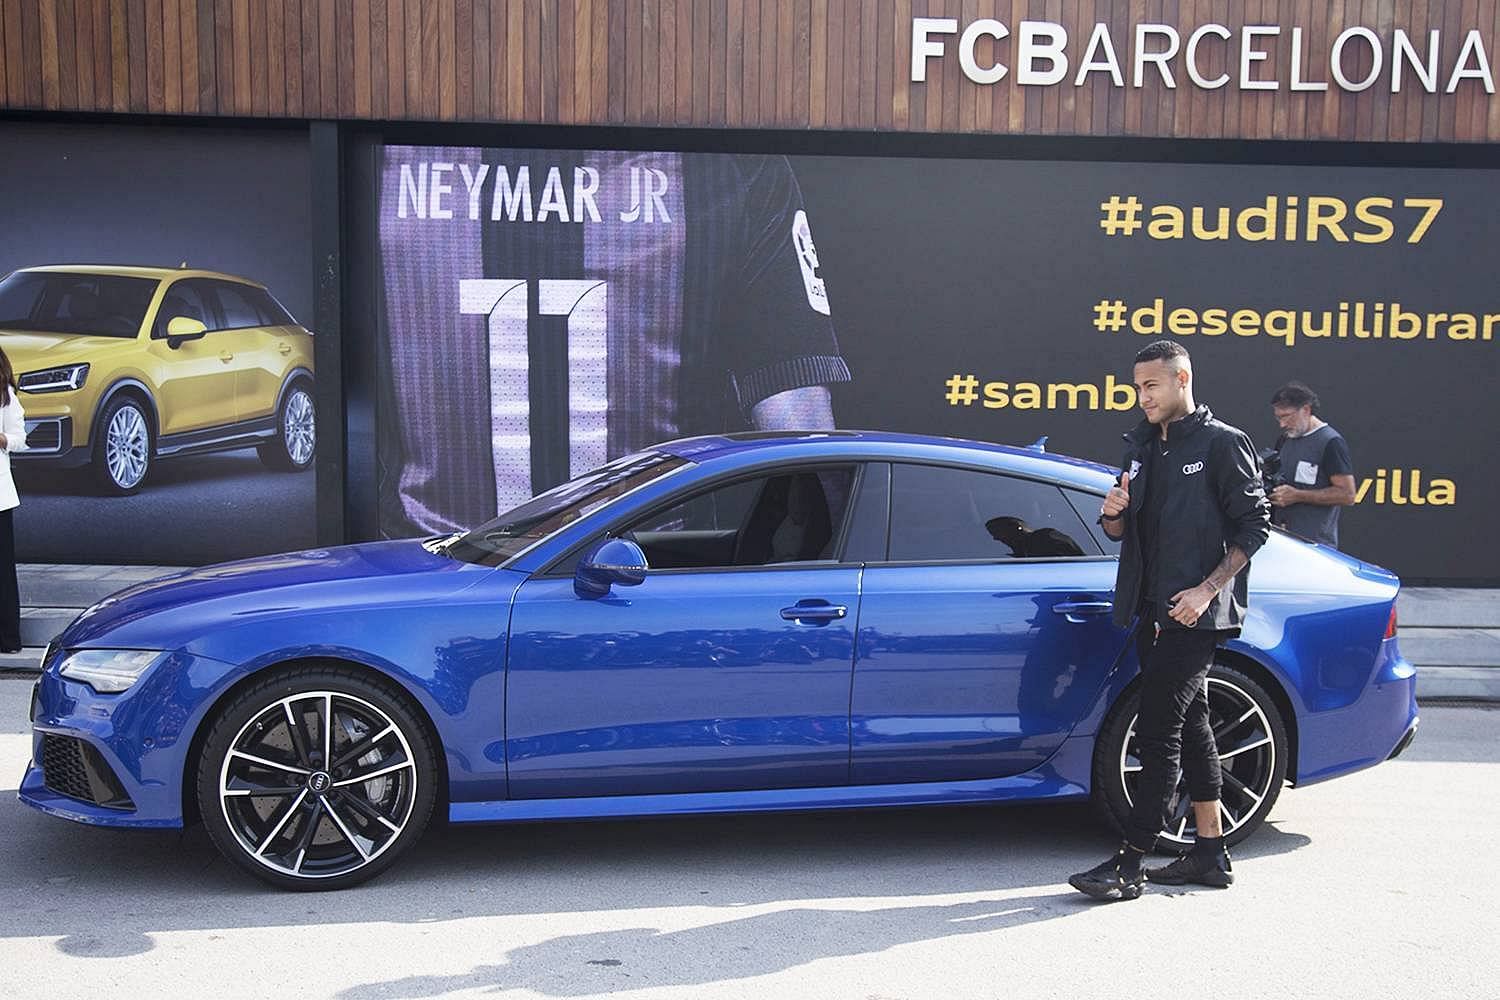 Neymar Jr.'s Blue Audi RS7